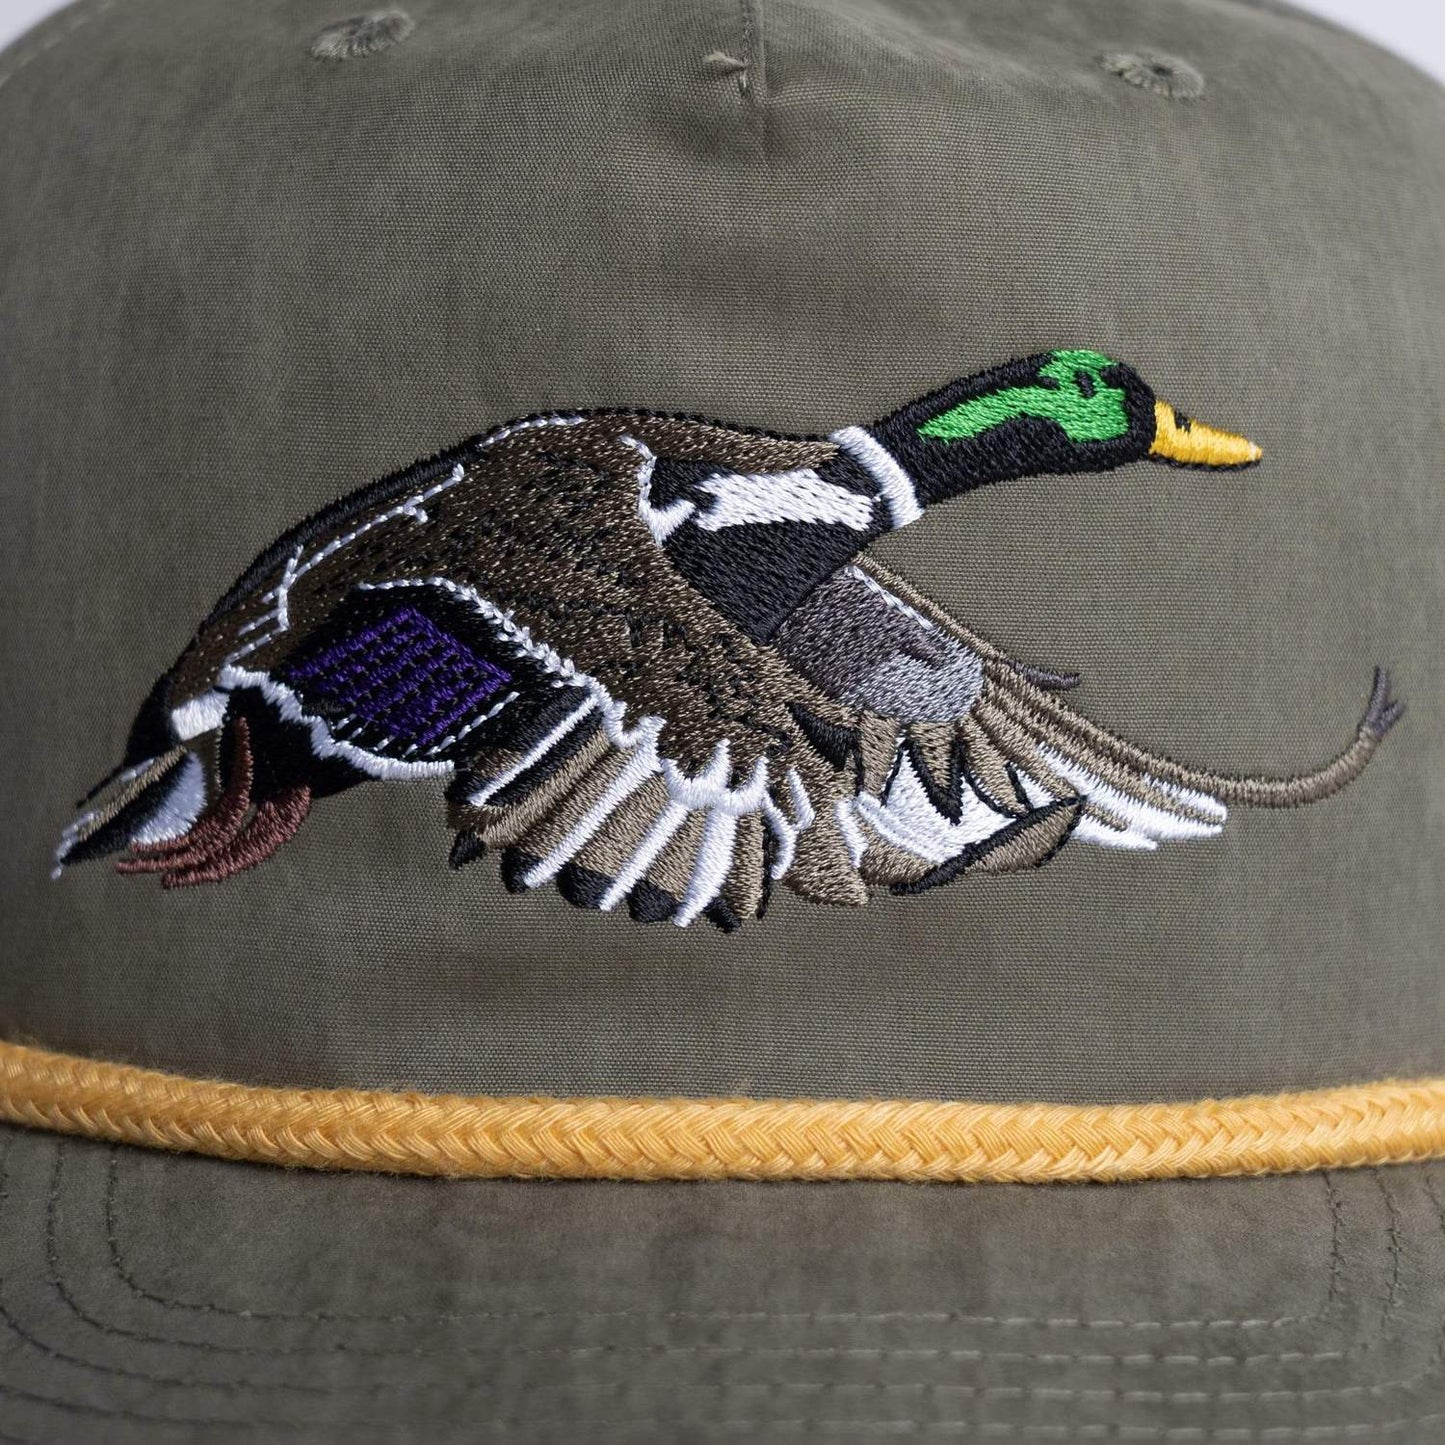 Duck Camp Mallard Hat